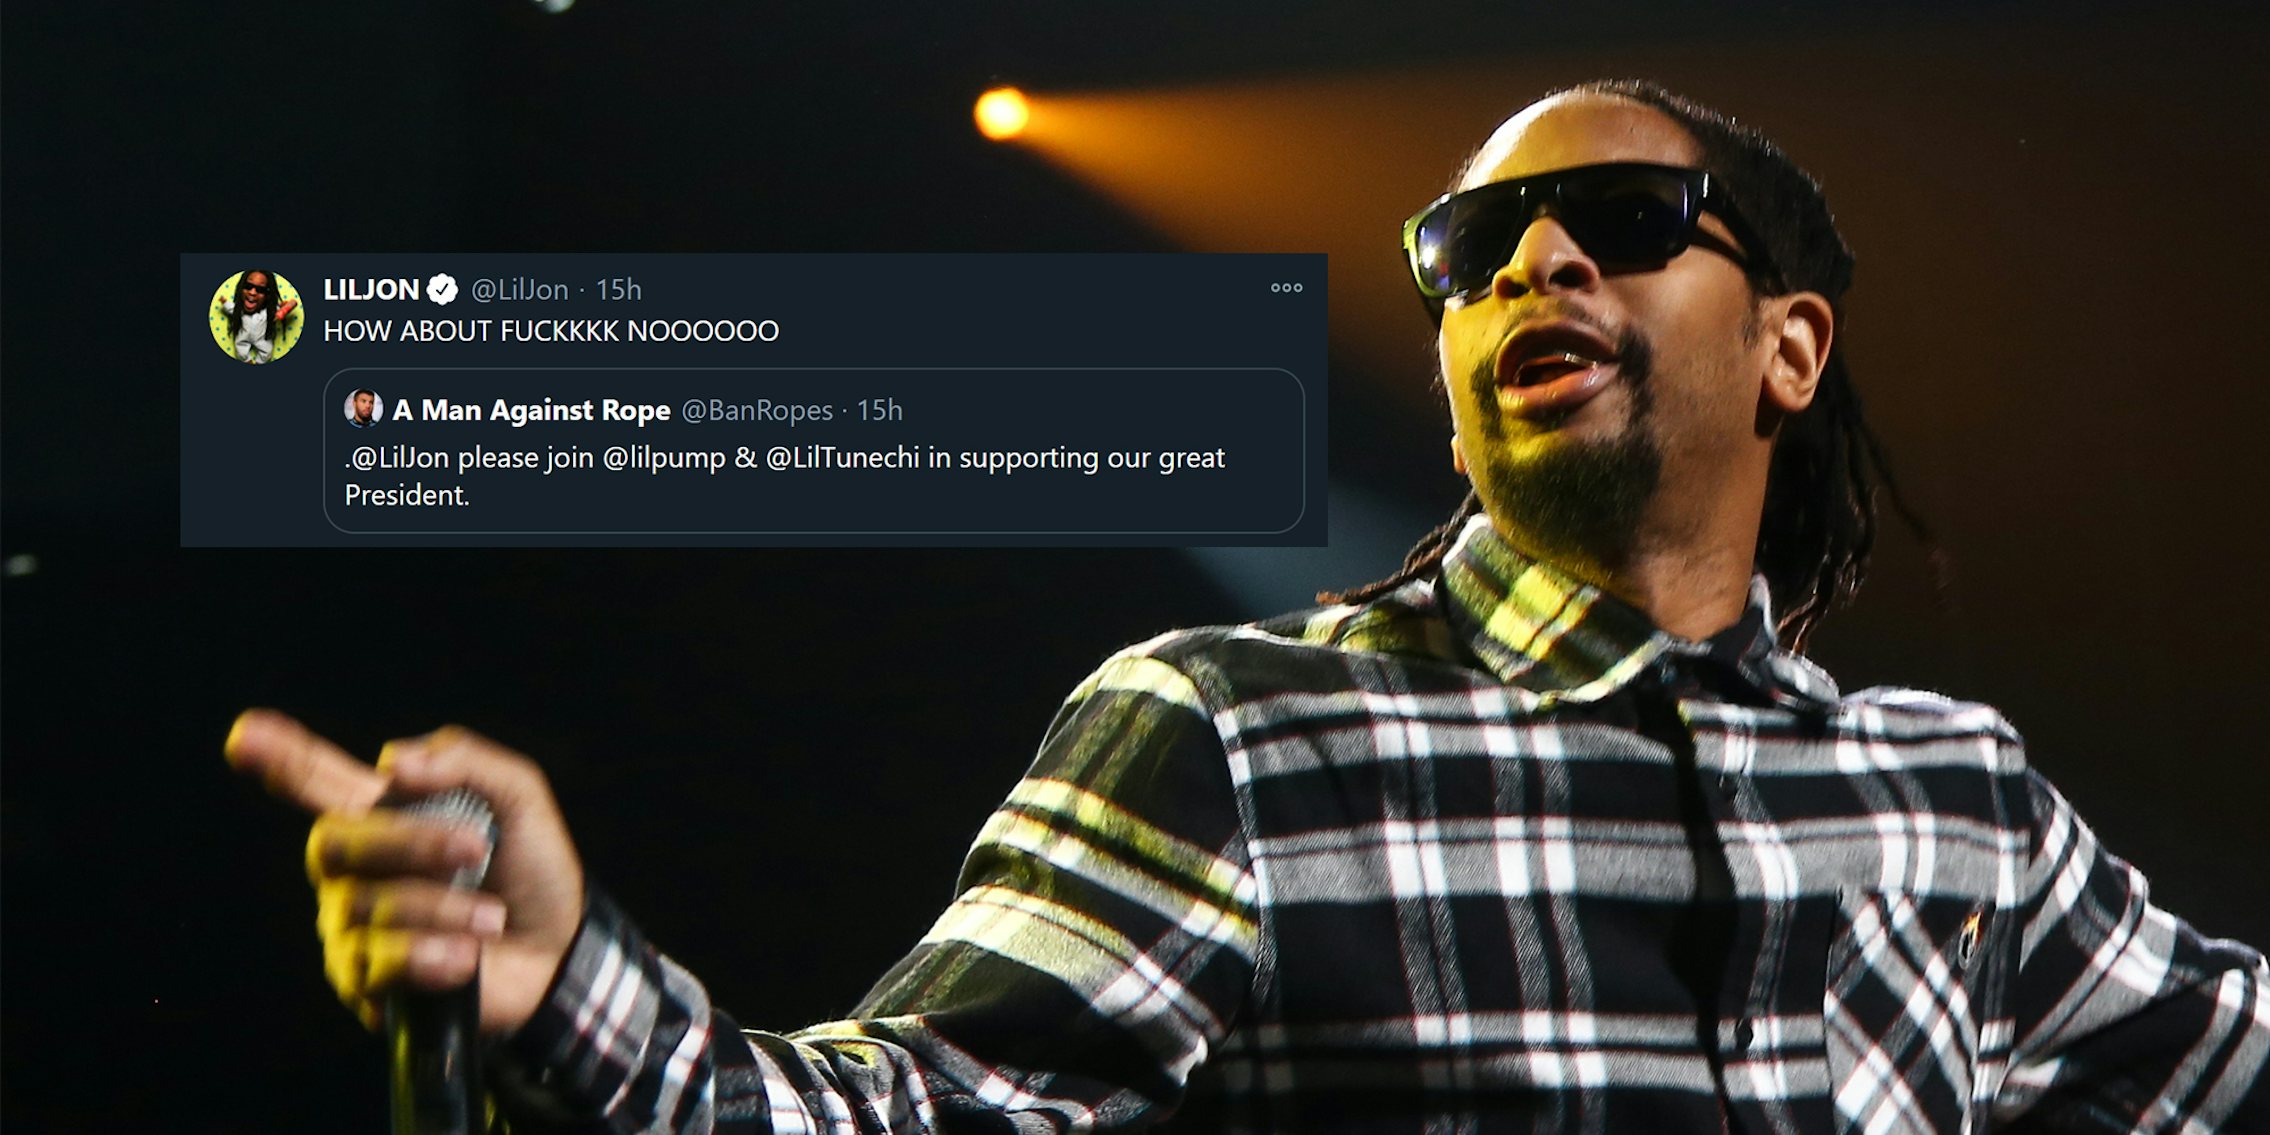 Lil Jon declines an invitation to support Donald Trump